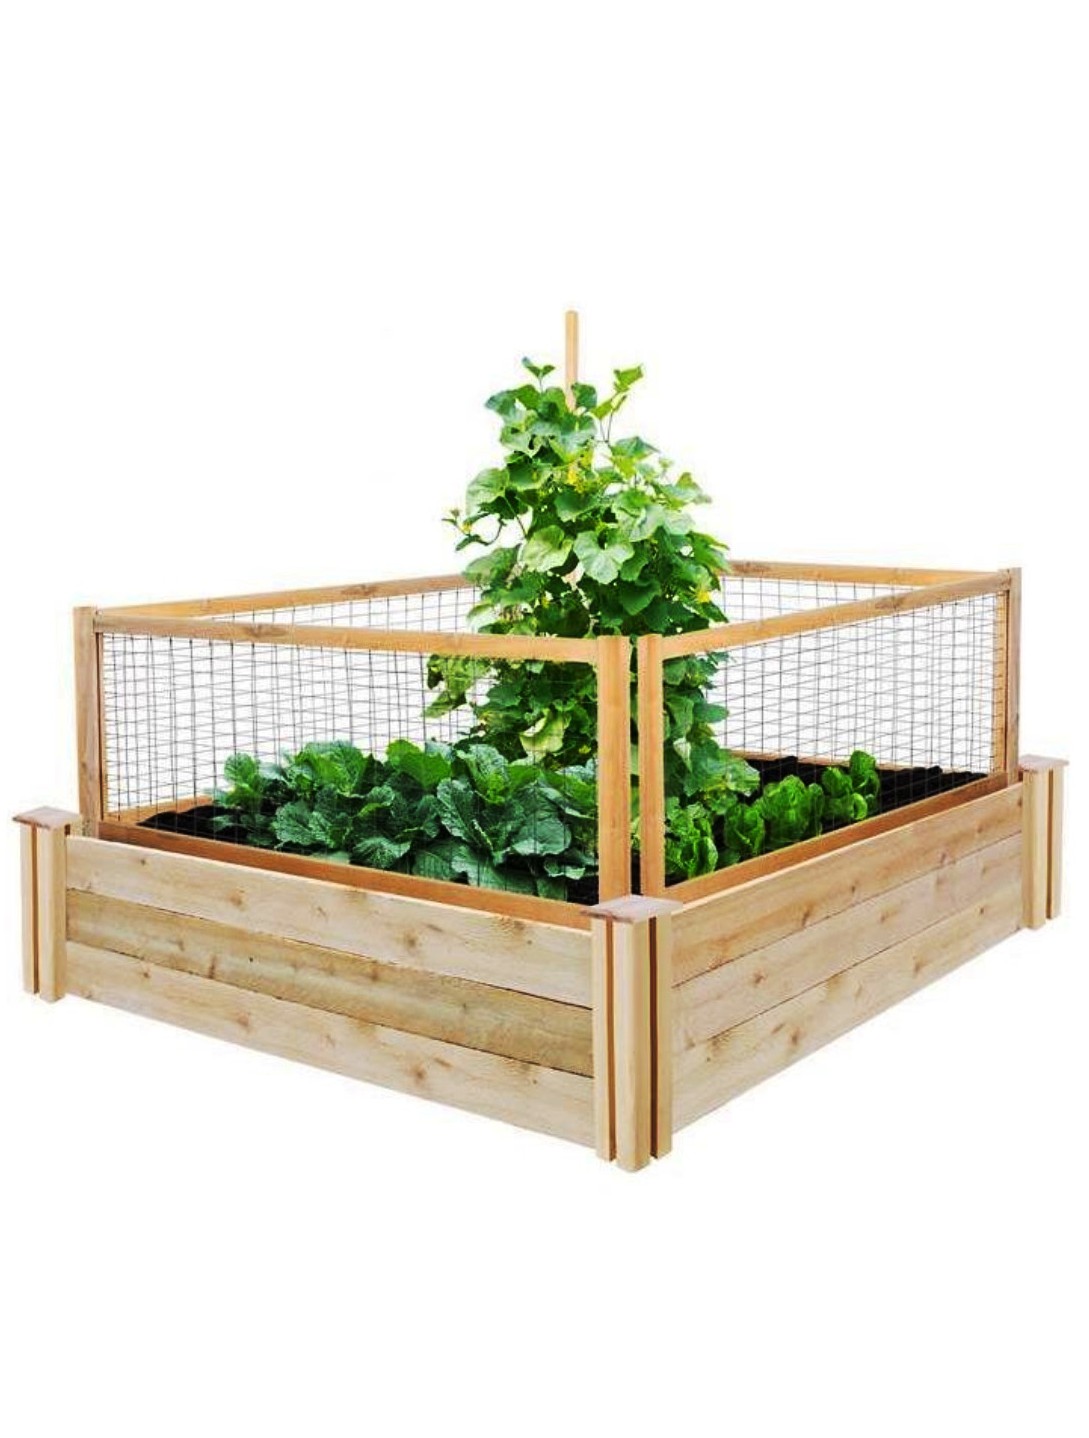 4X4 Raised Garden-Bed with CritterGuard -Cedar - Sunrise Urban Farming